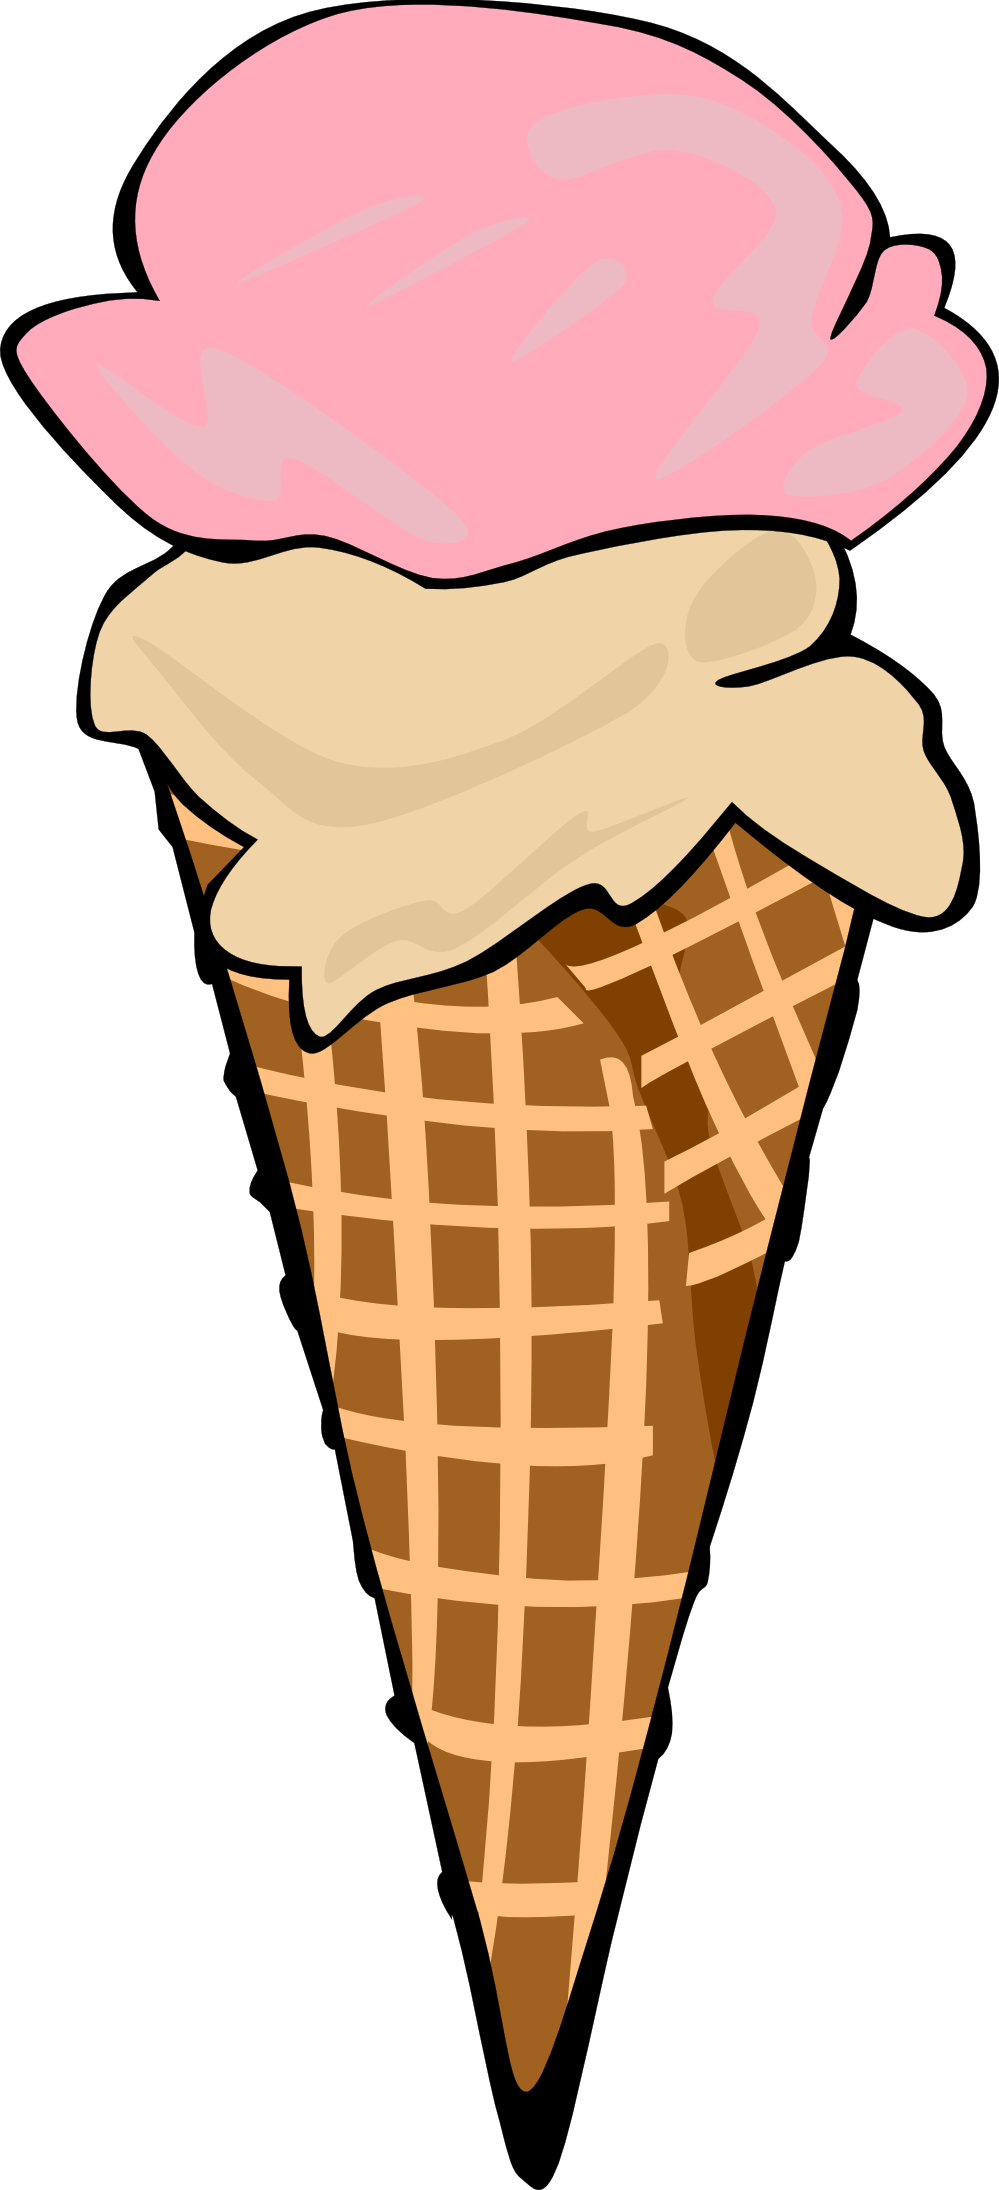 Ice cream cone cute ice cream clipart clipart kid.